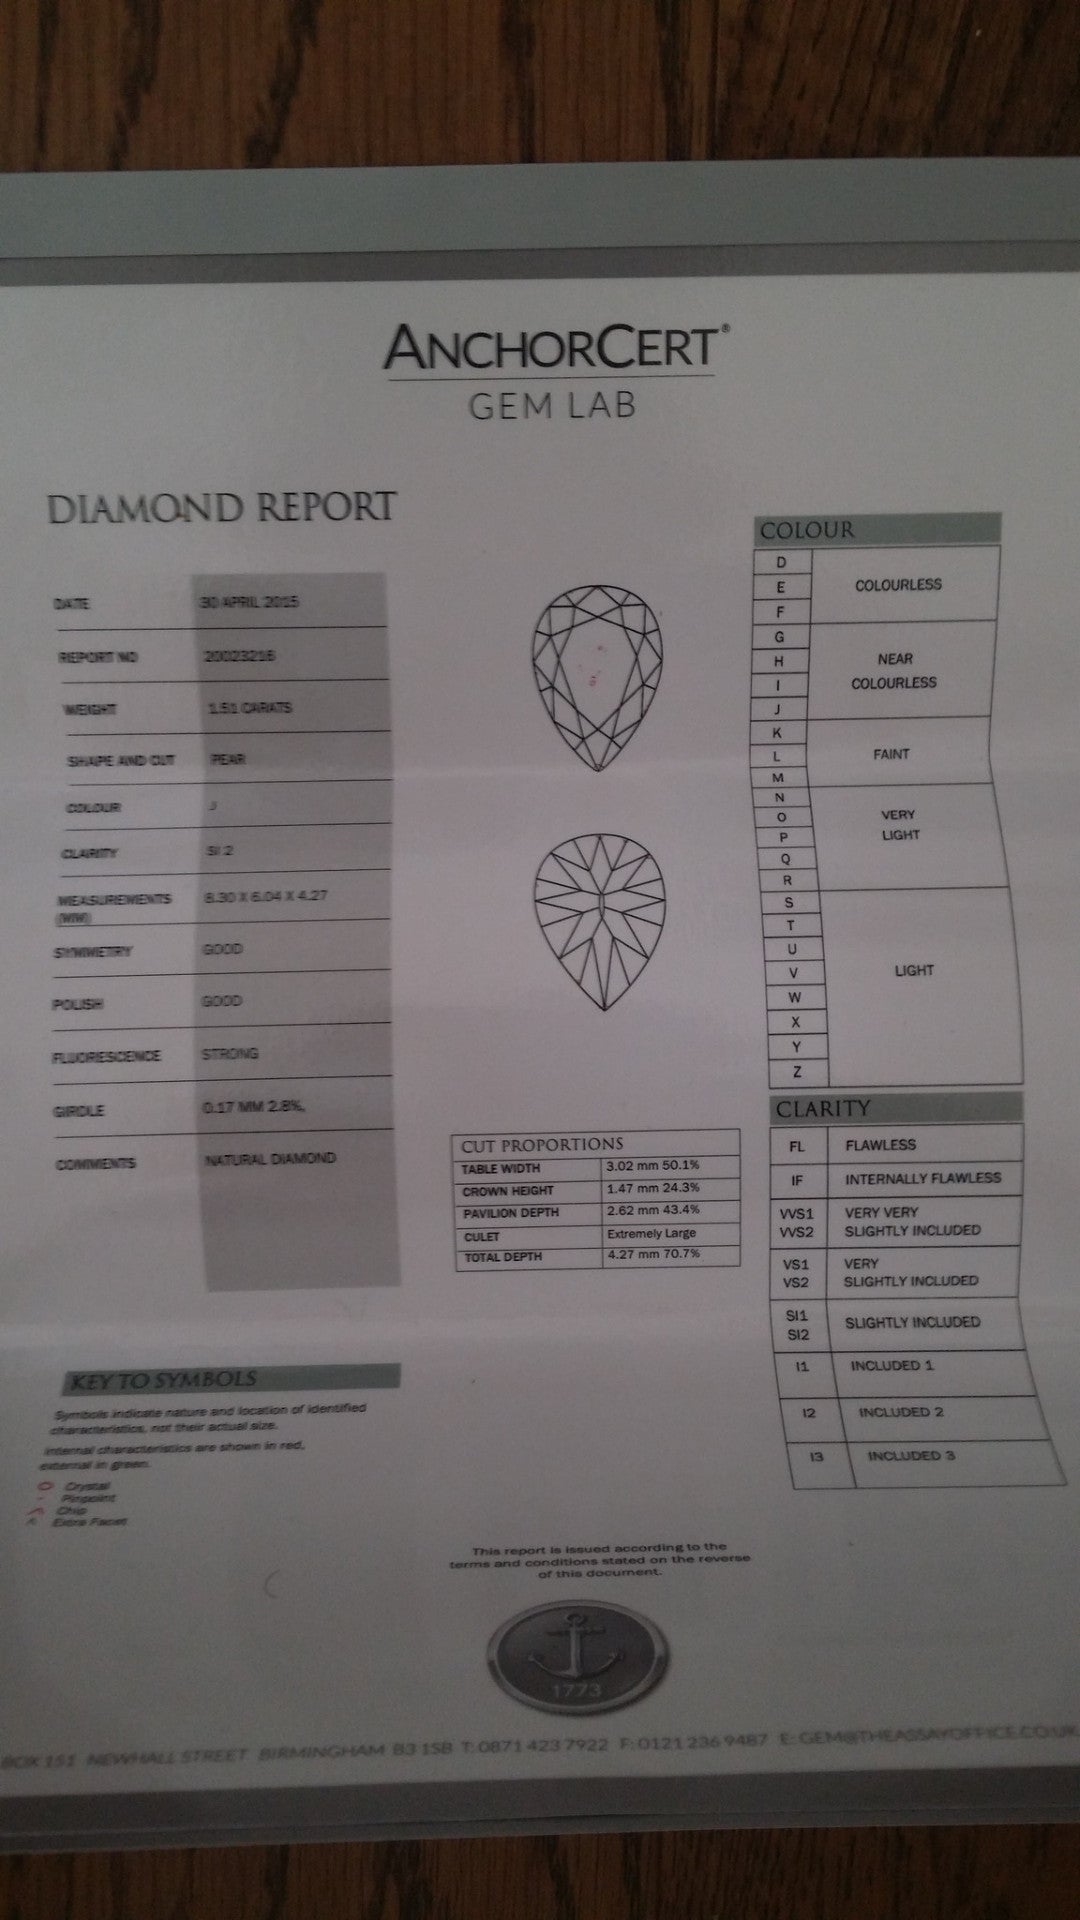 Vintage Edwardian 1.51ct Diamond & 1.37ct Burmese Ruby 'Toi et Moi' Ring in Platinum